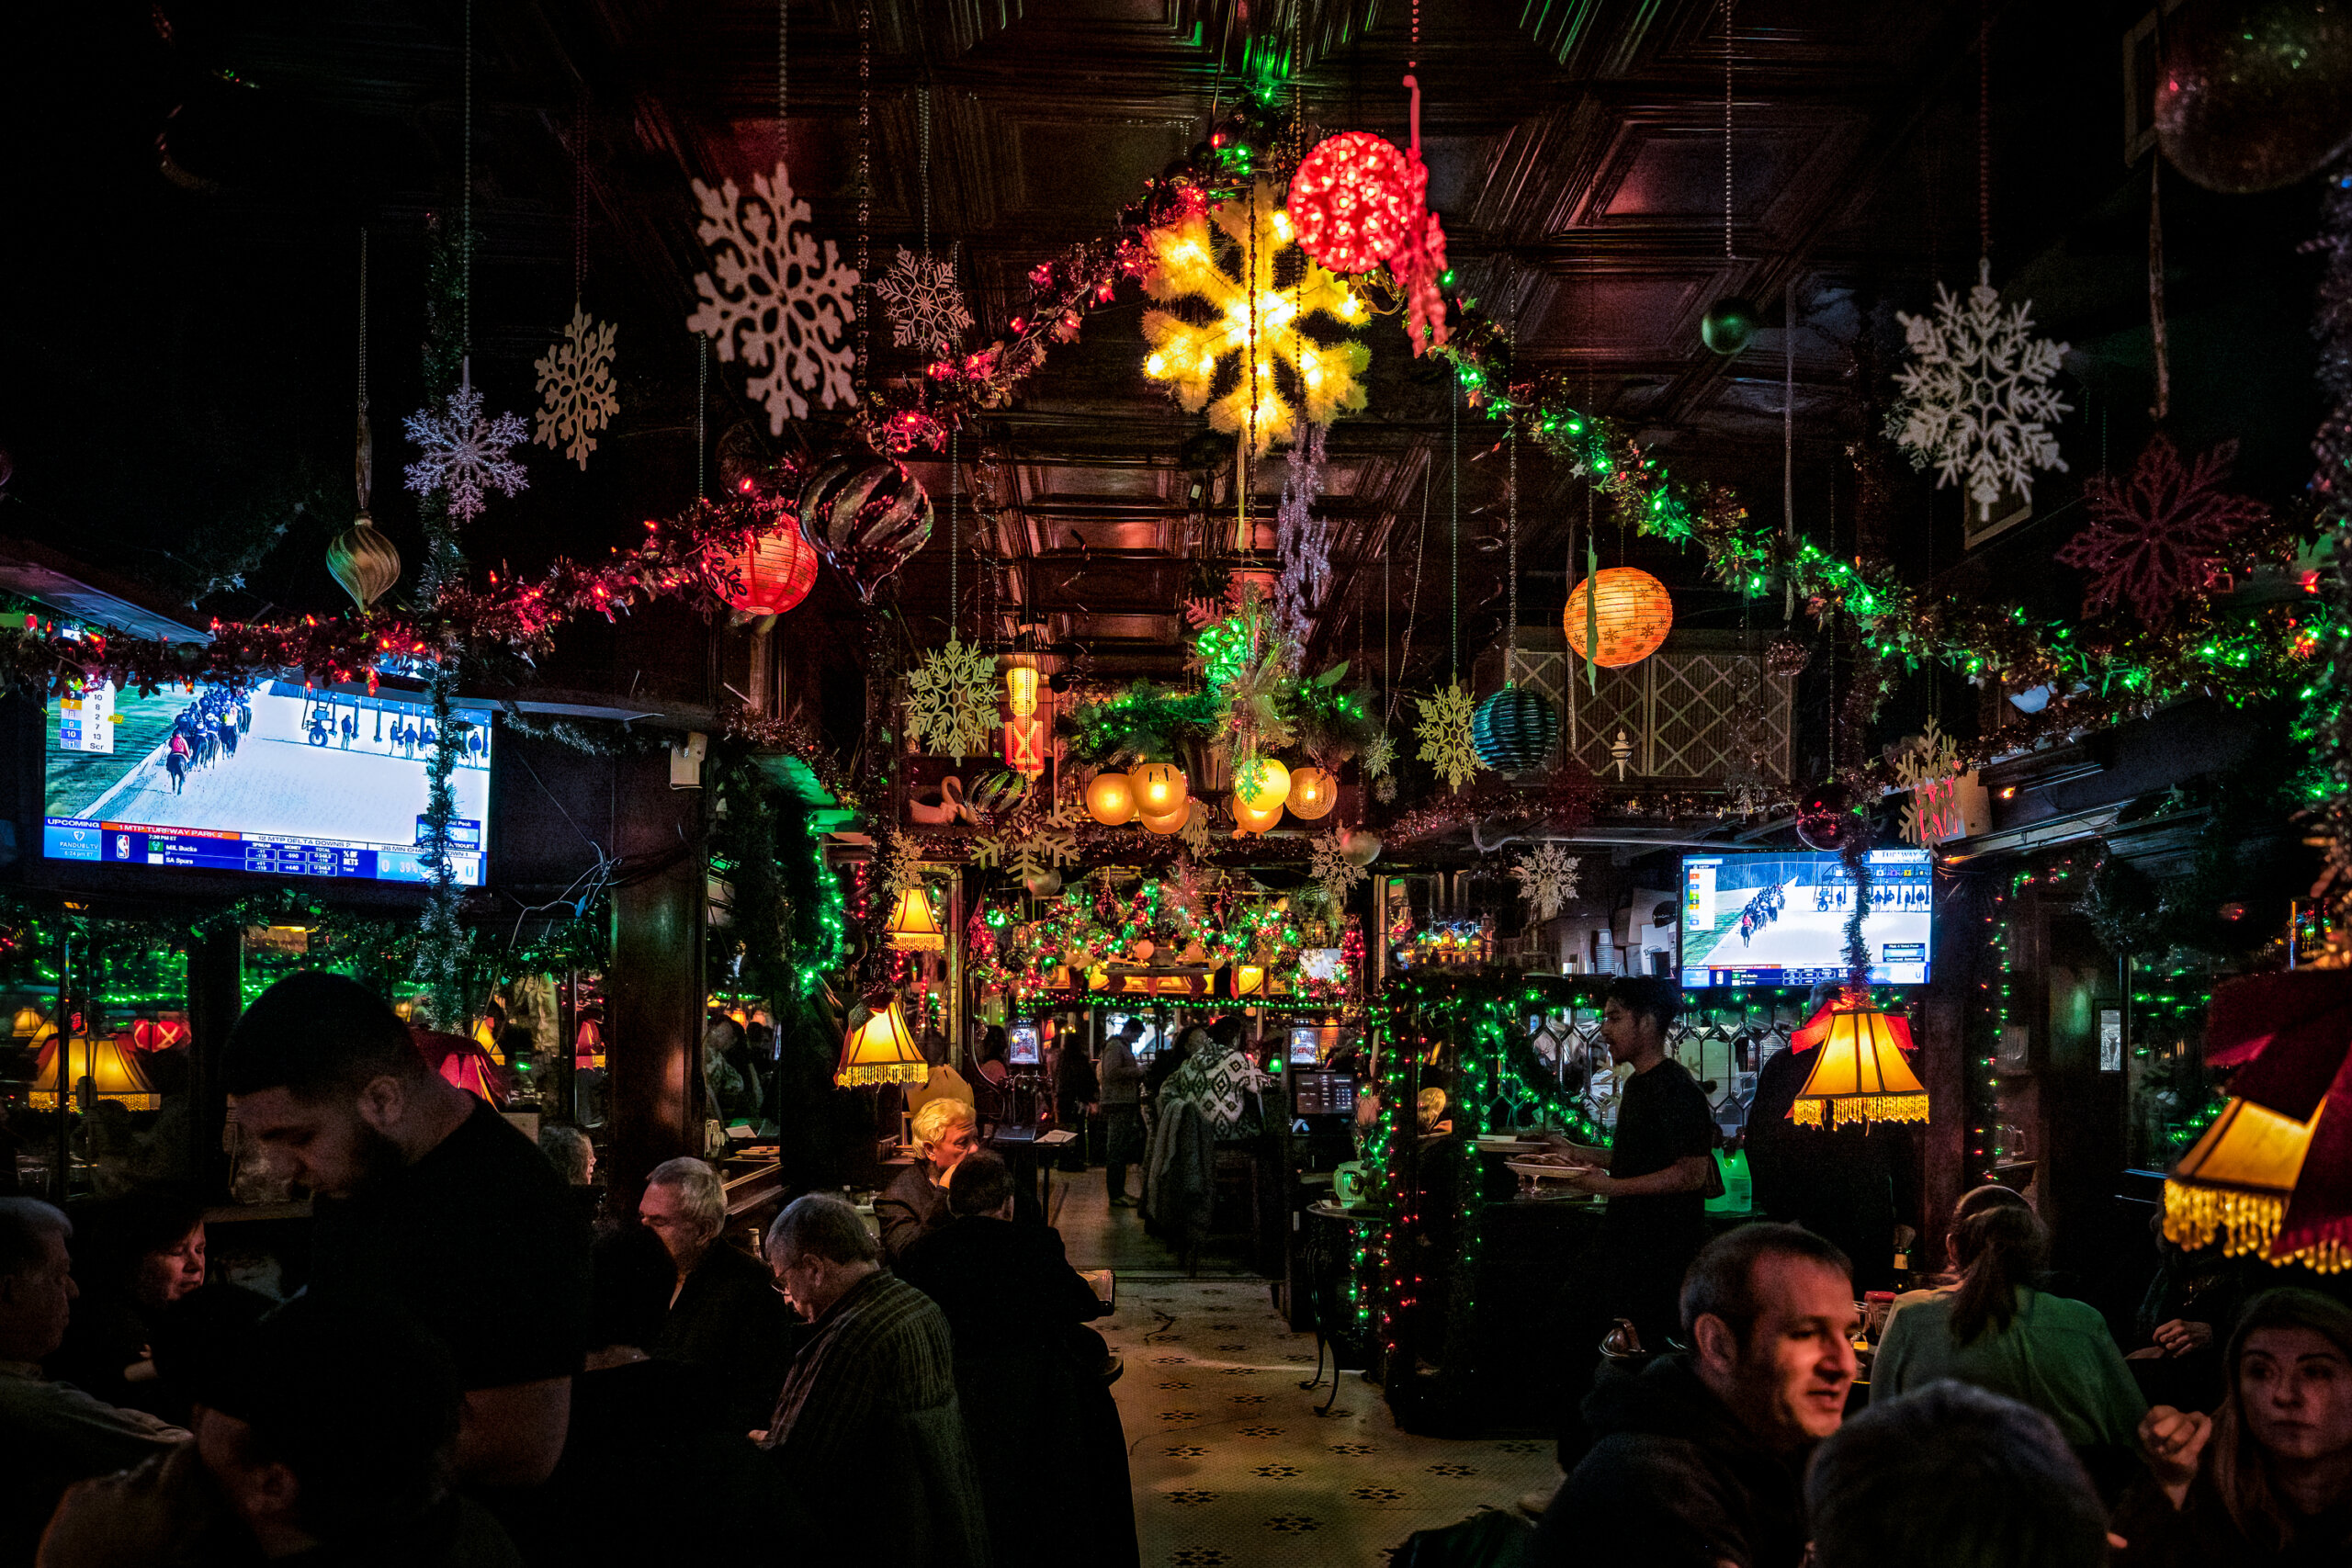 A little more Christmas': Halls of Bay Ridge restaurant Skinflints